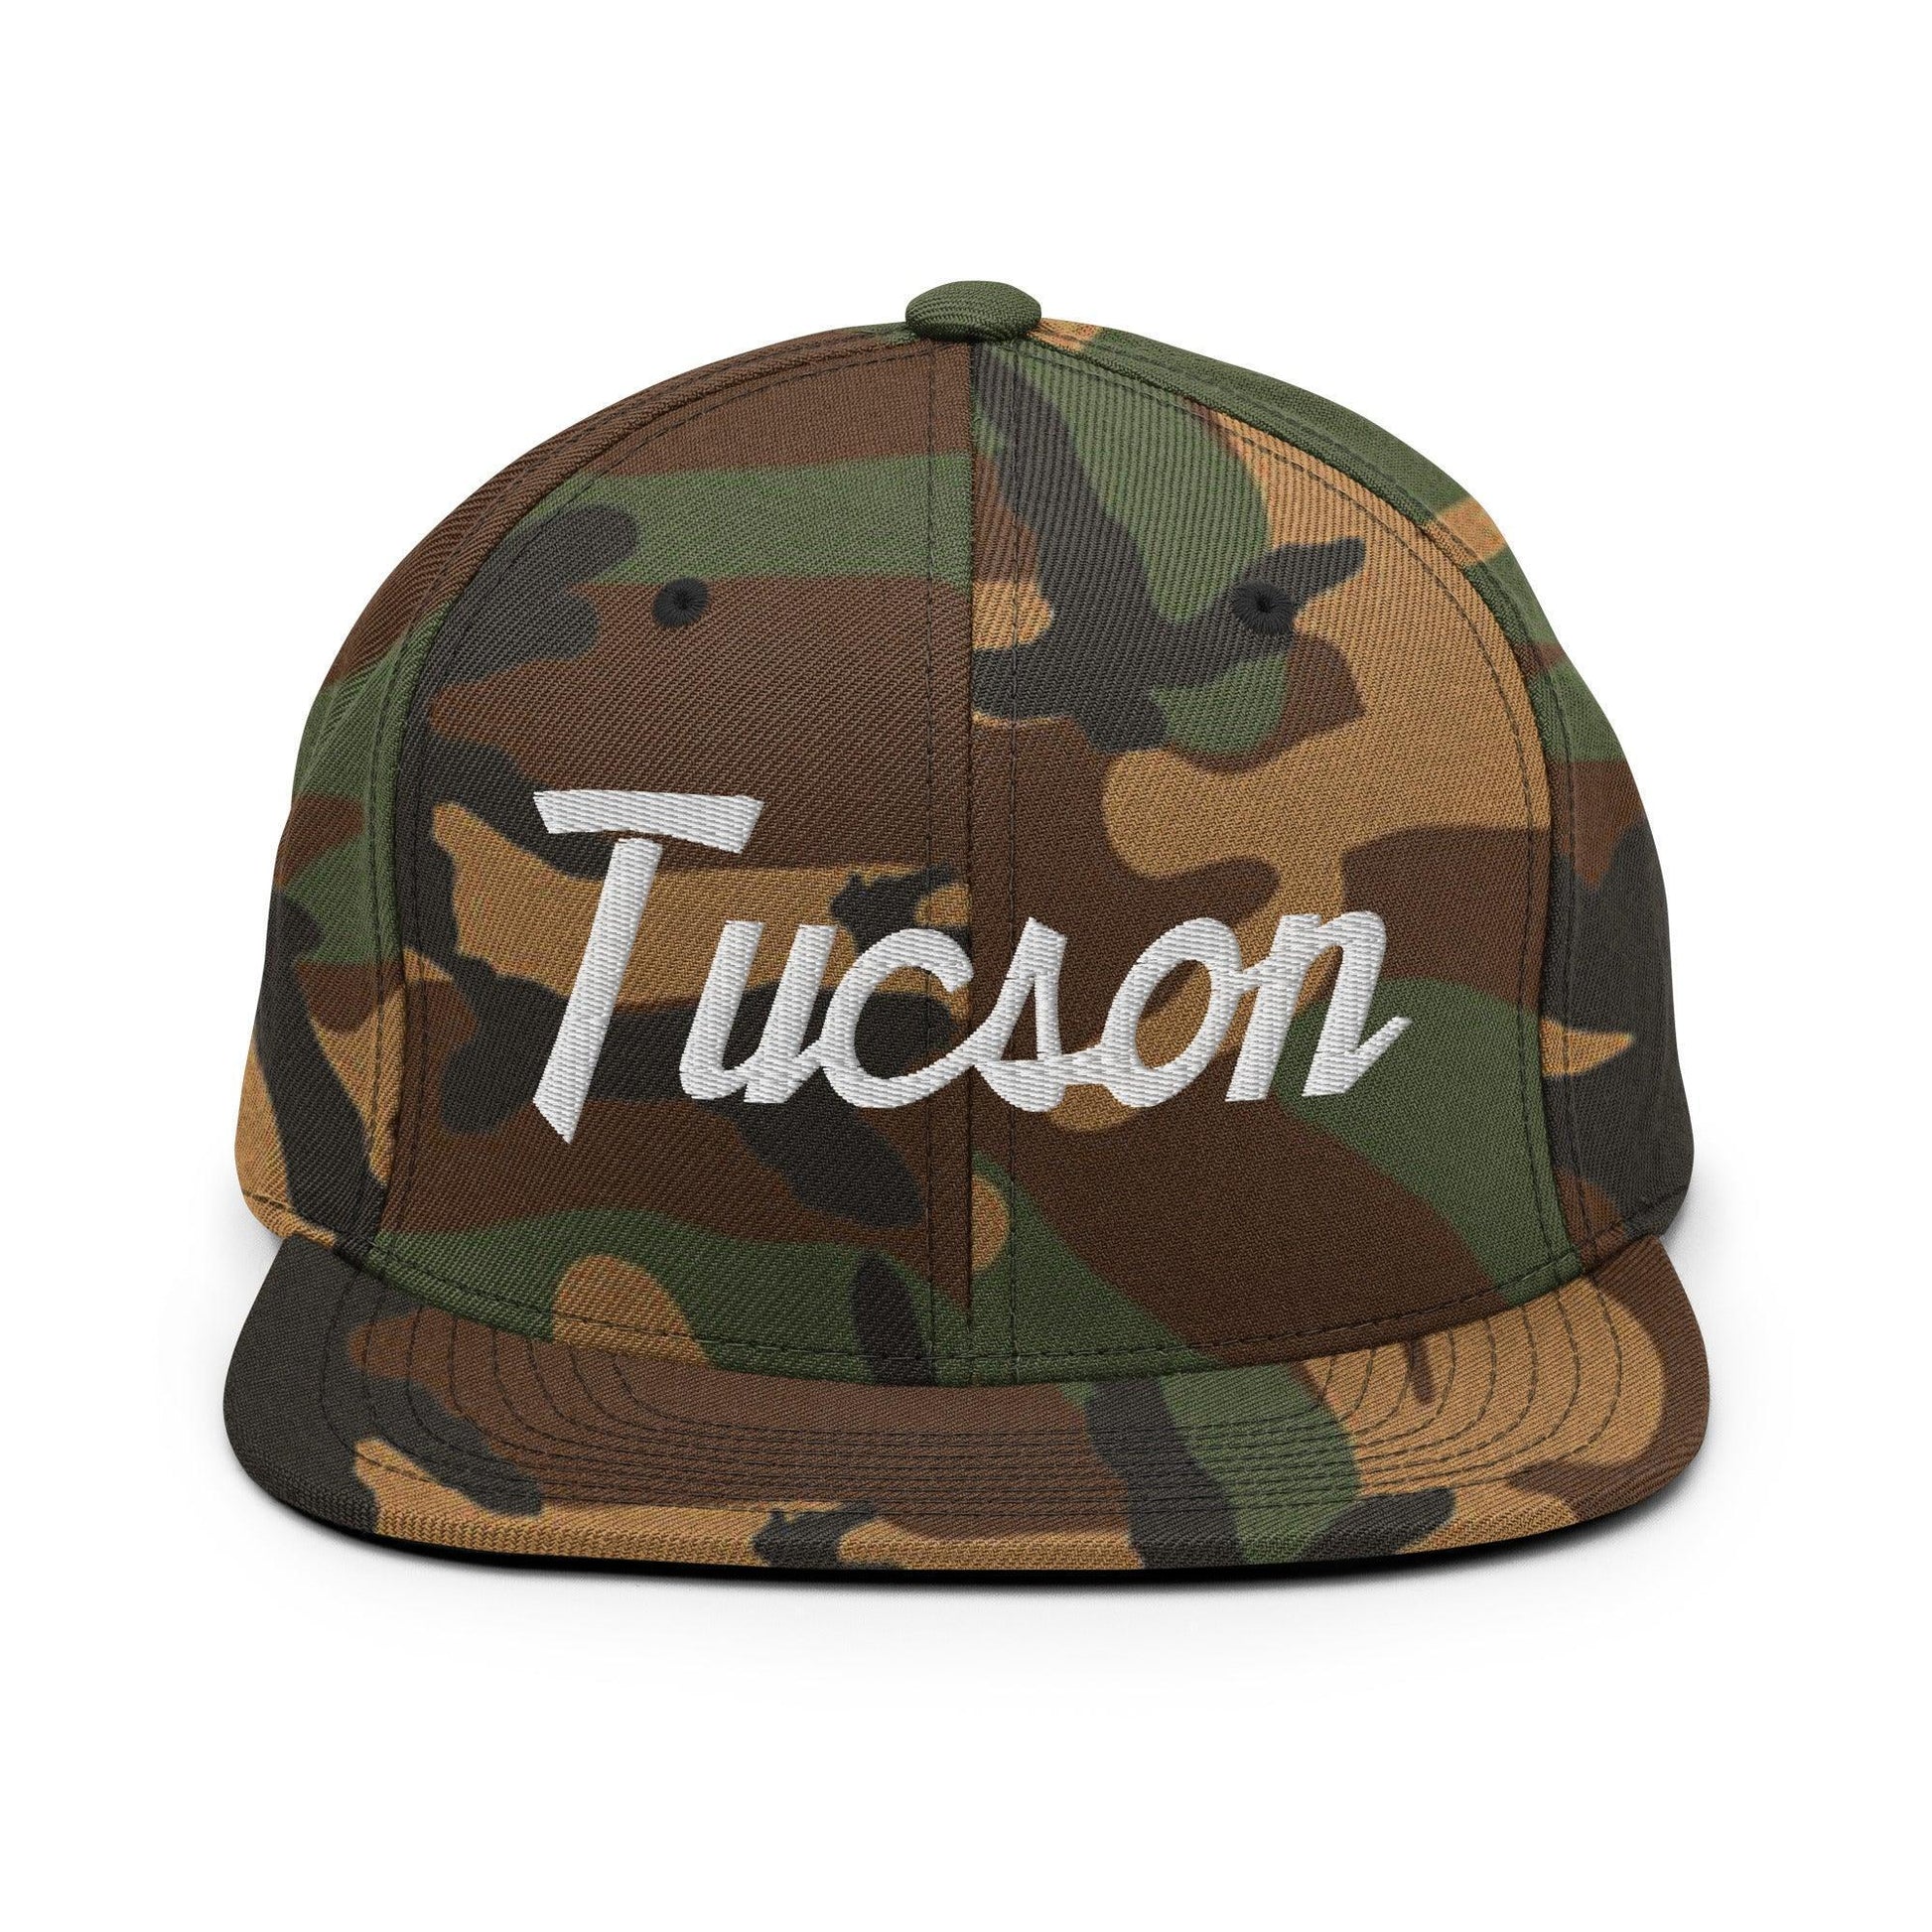 Tucson Script Snapback Hat Green Camo